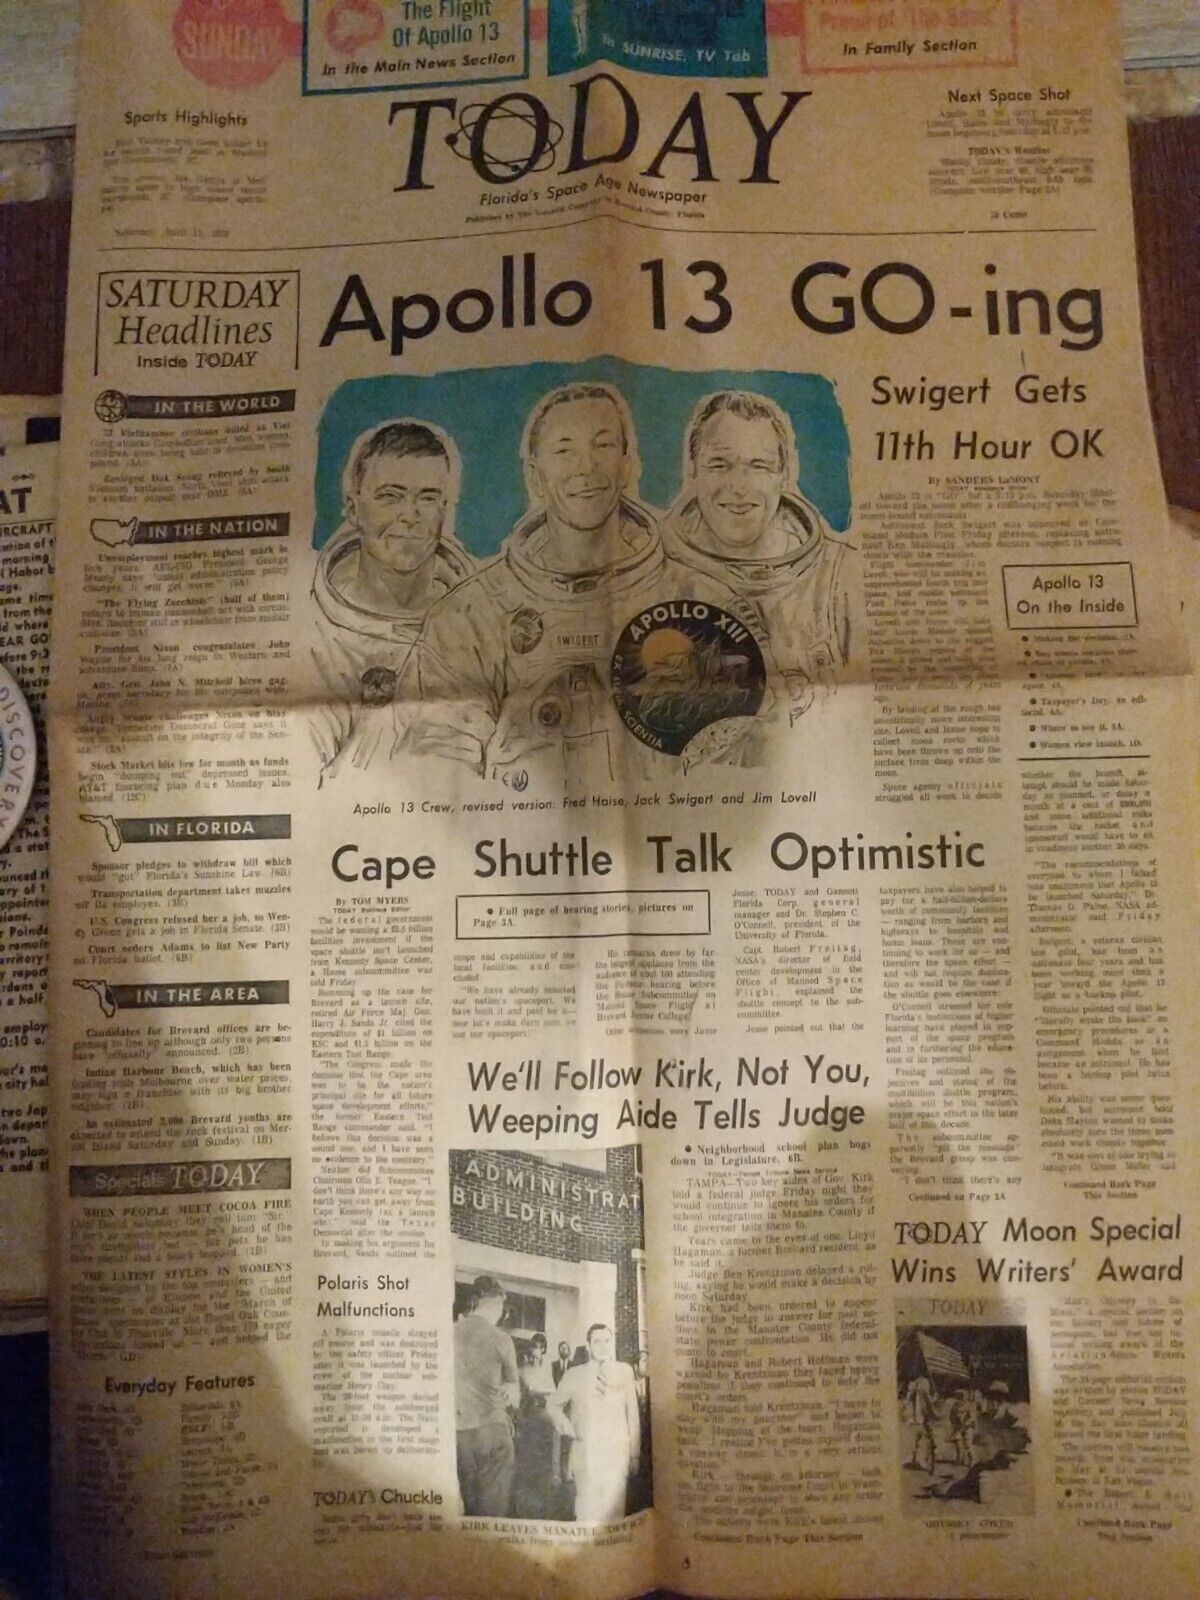 Apollo 13 Newspaper 1970 Florida Today Brevard County April 11,1970 Cape Canaver